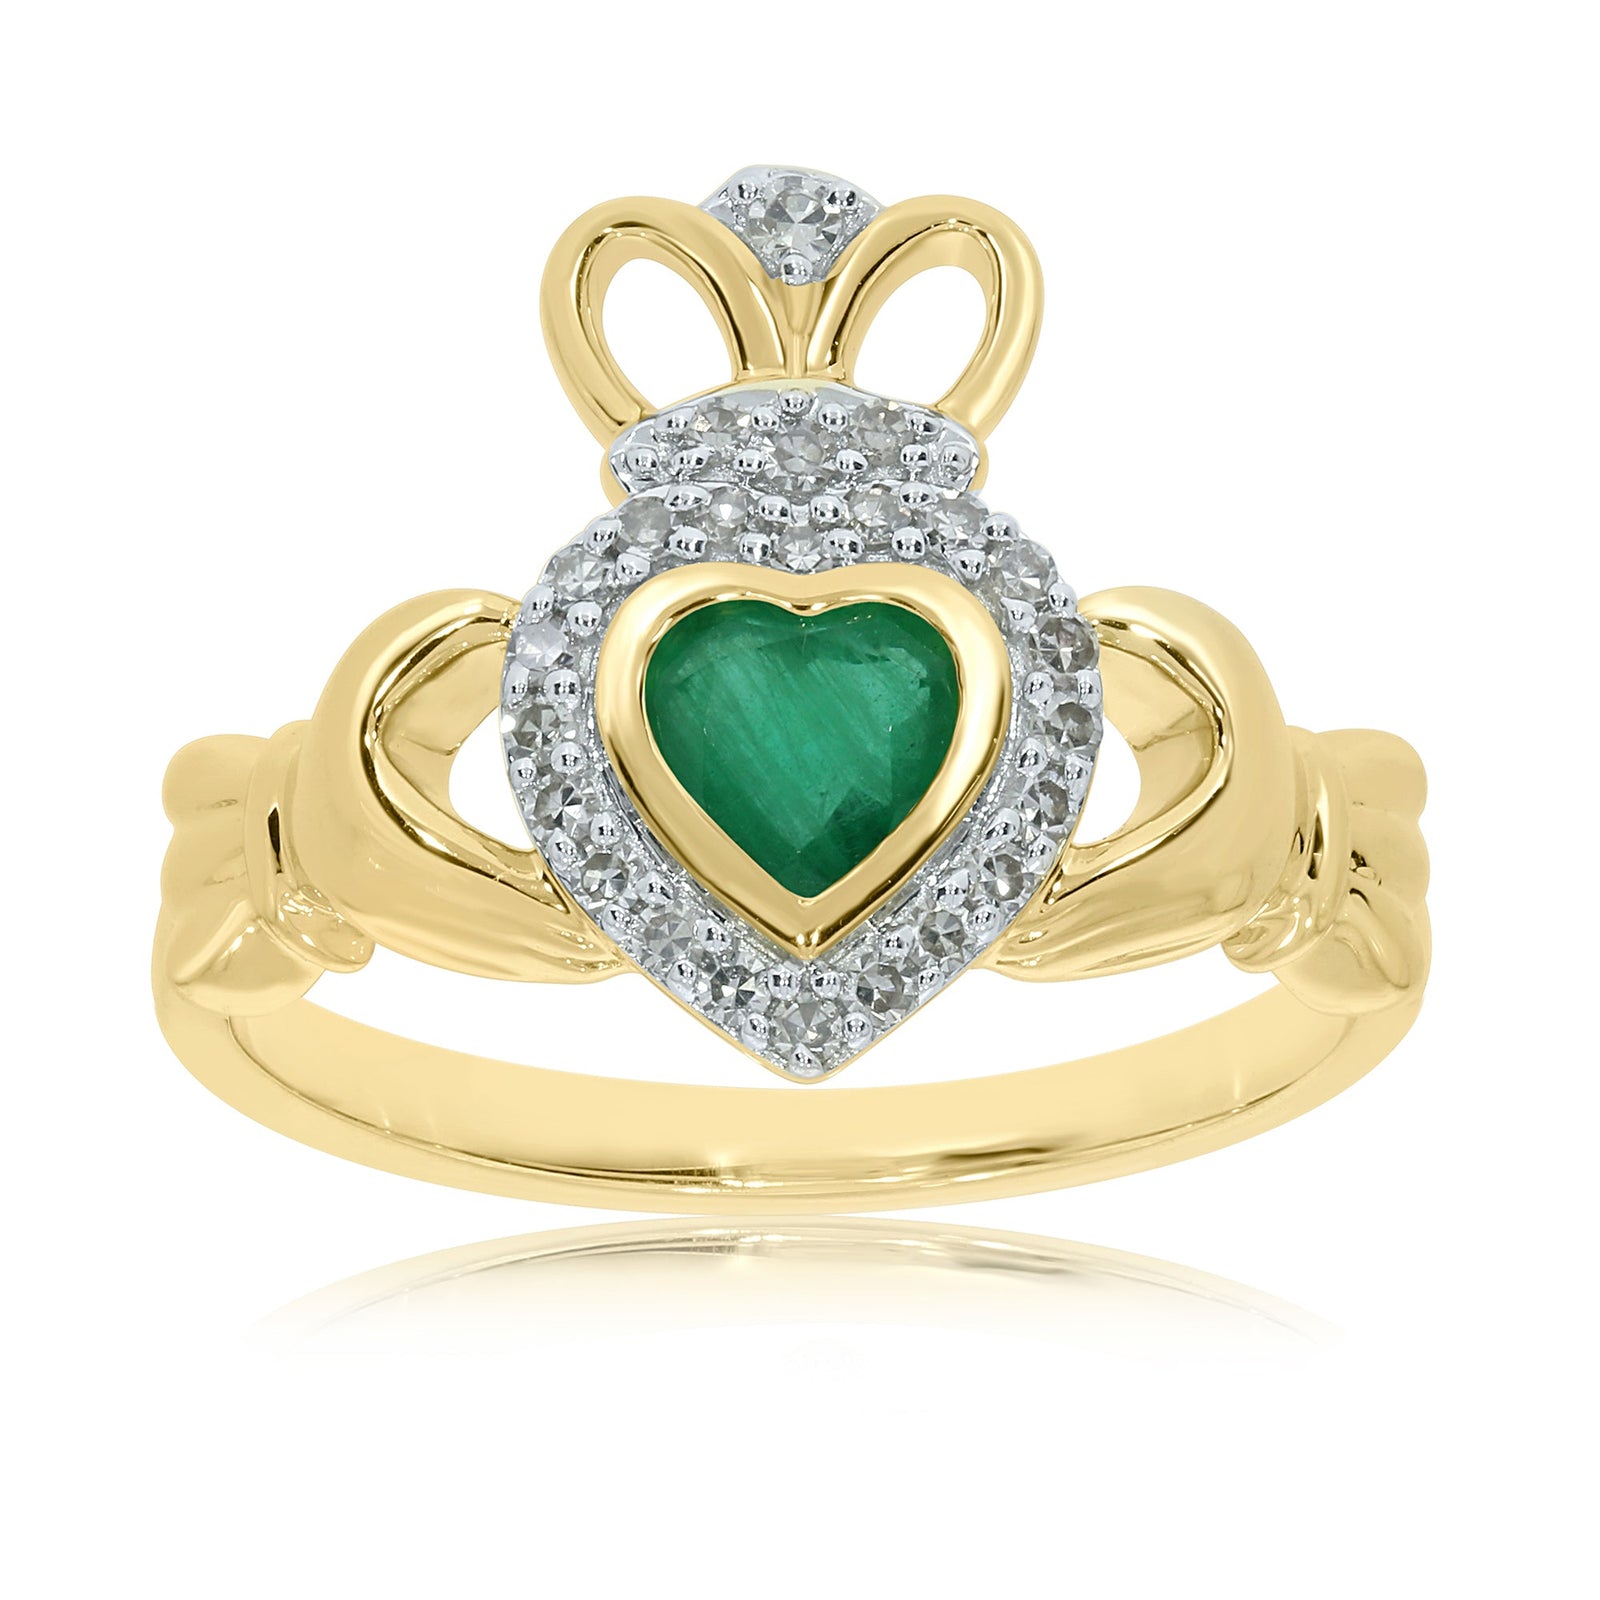 9ct gold 5mm heart shape emerald & diamond cladagh ring 0.15ct